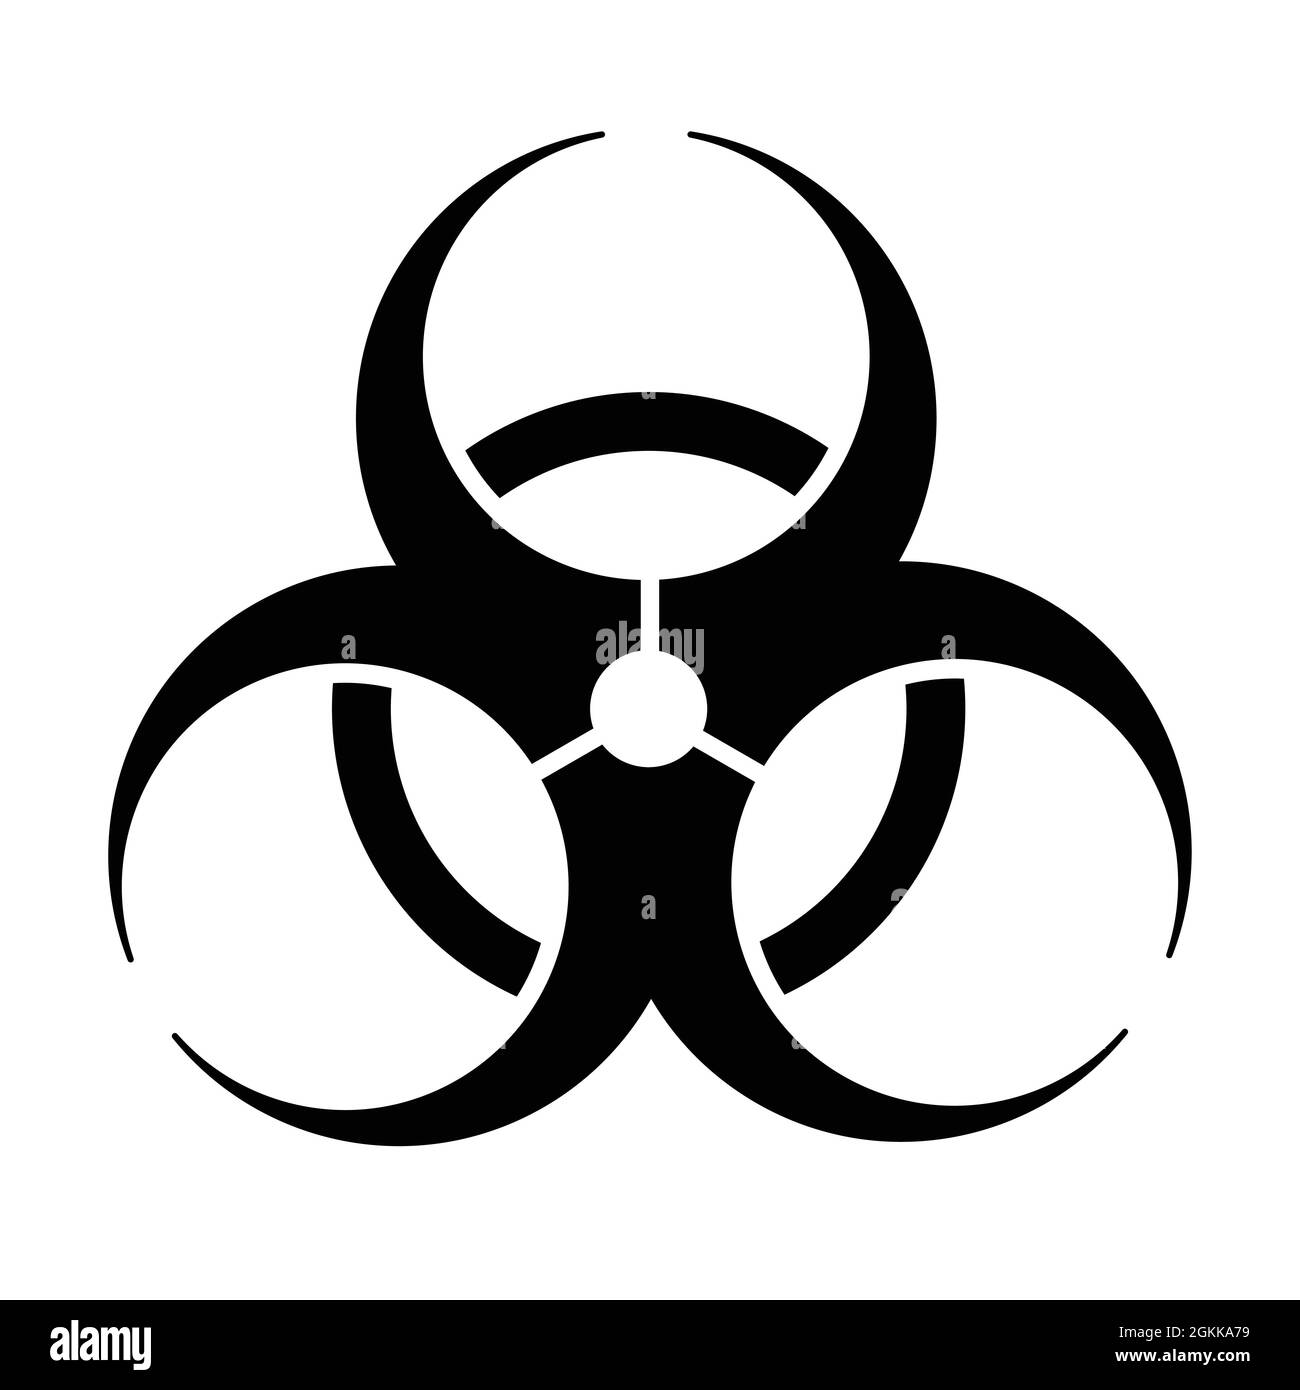 biohazard icon vector for graphic design, logo, website, social media, mobile app, UI illustration Stock Vector